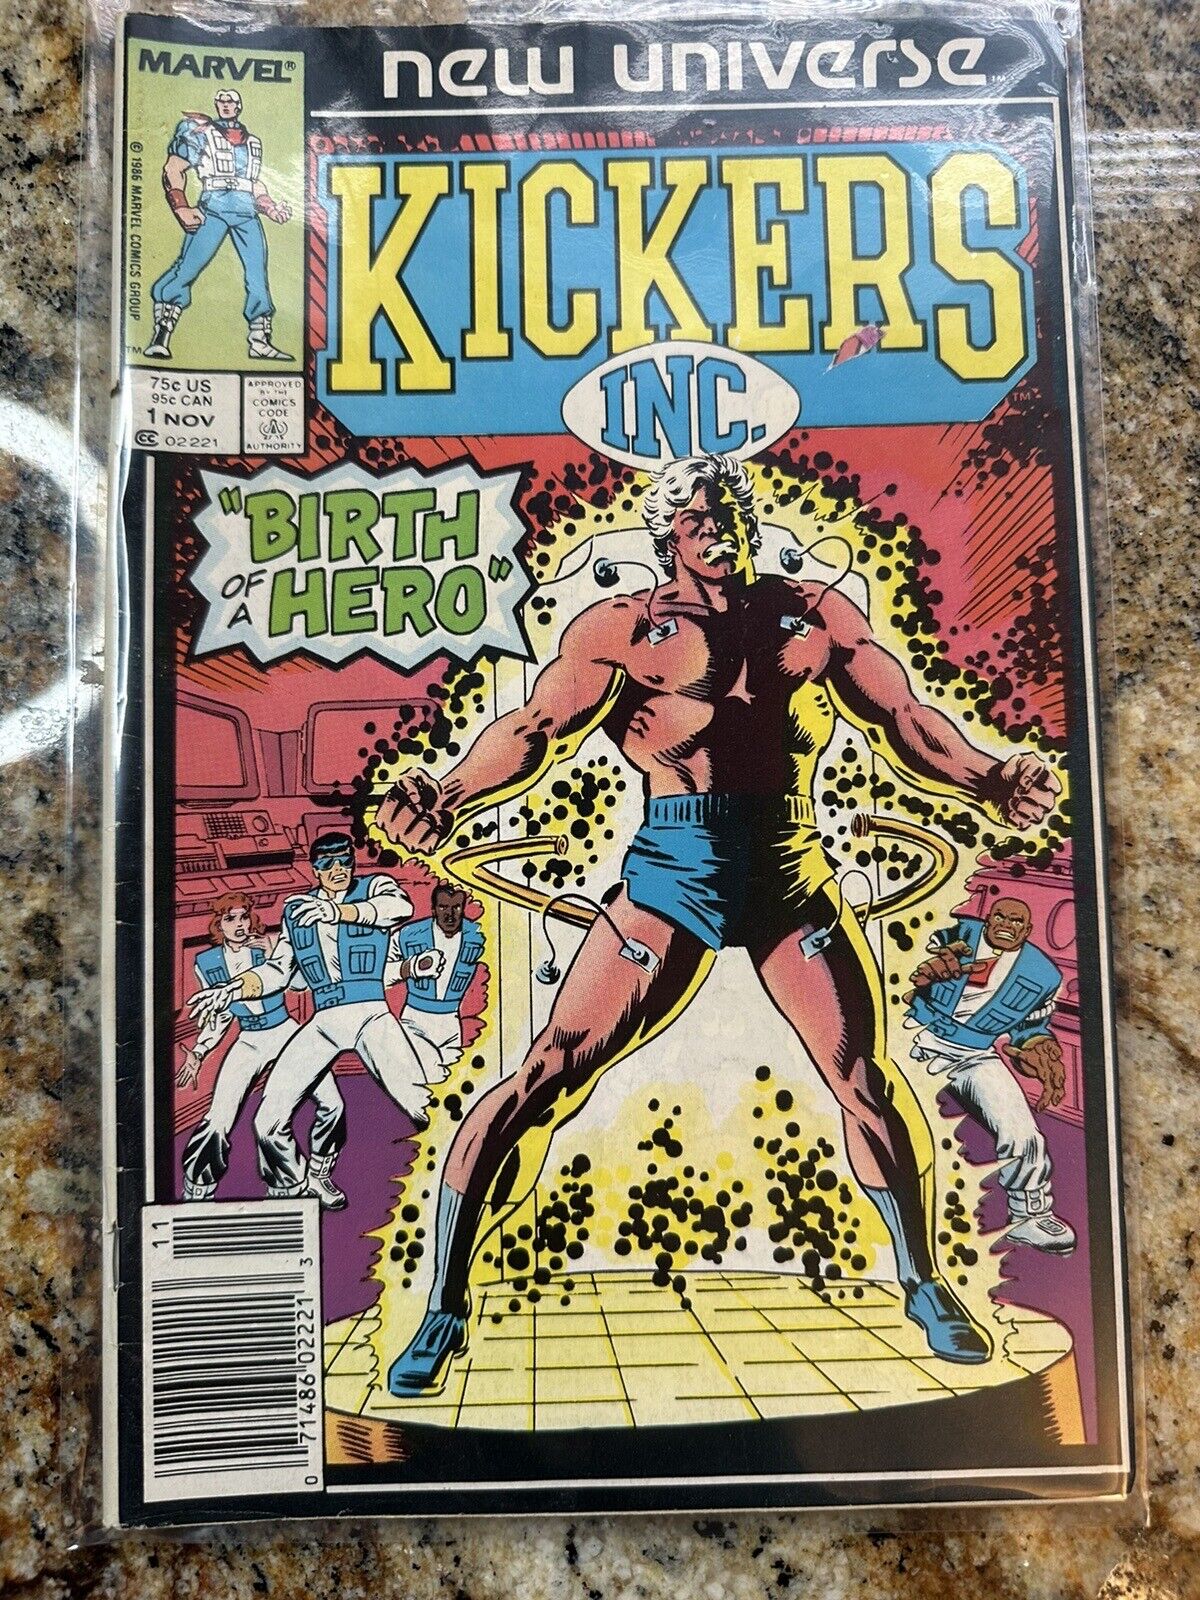 KICKERS INC. #1 Comic Book New Universe Marvel November 1986